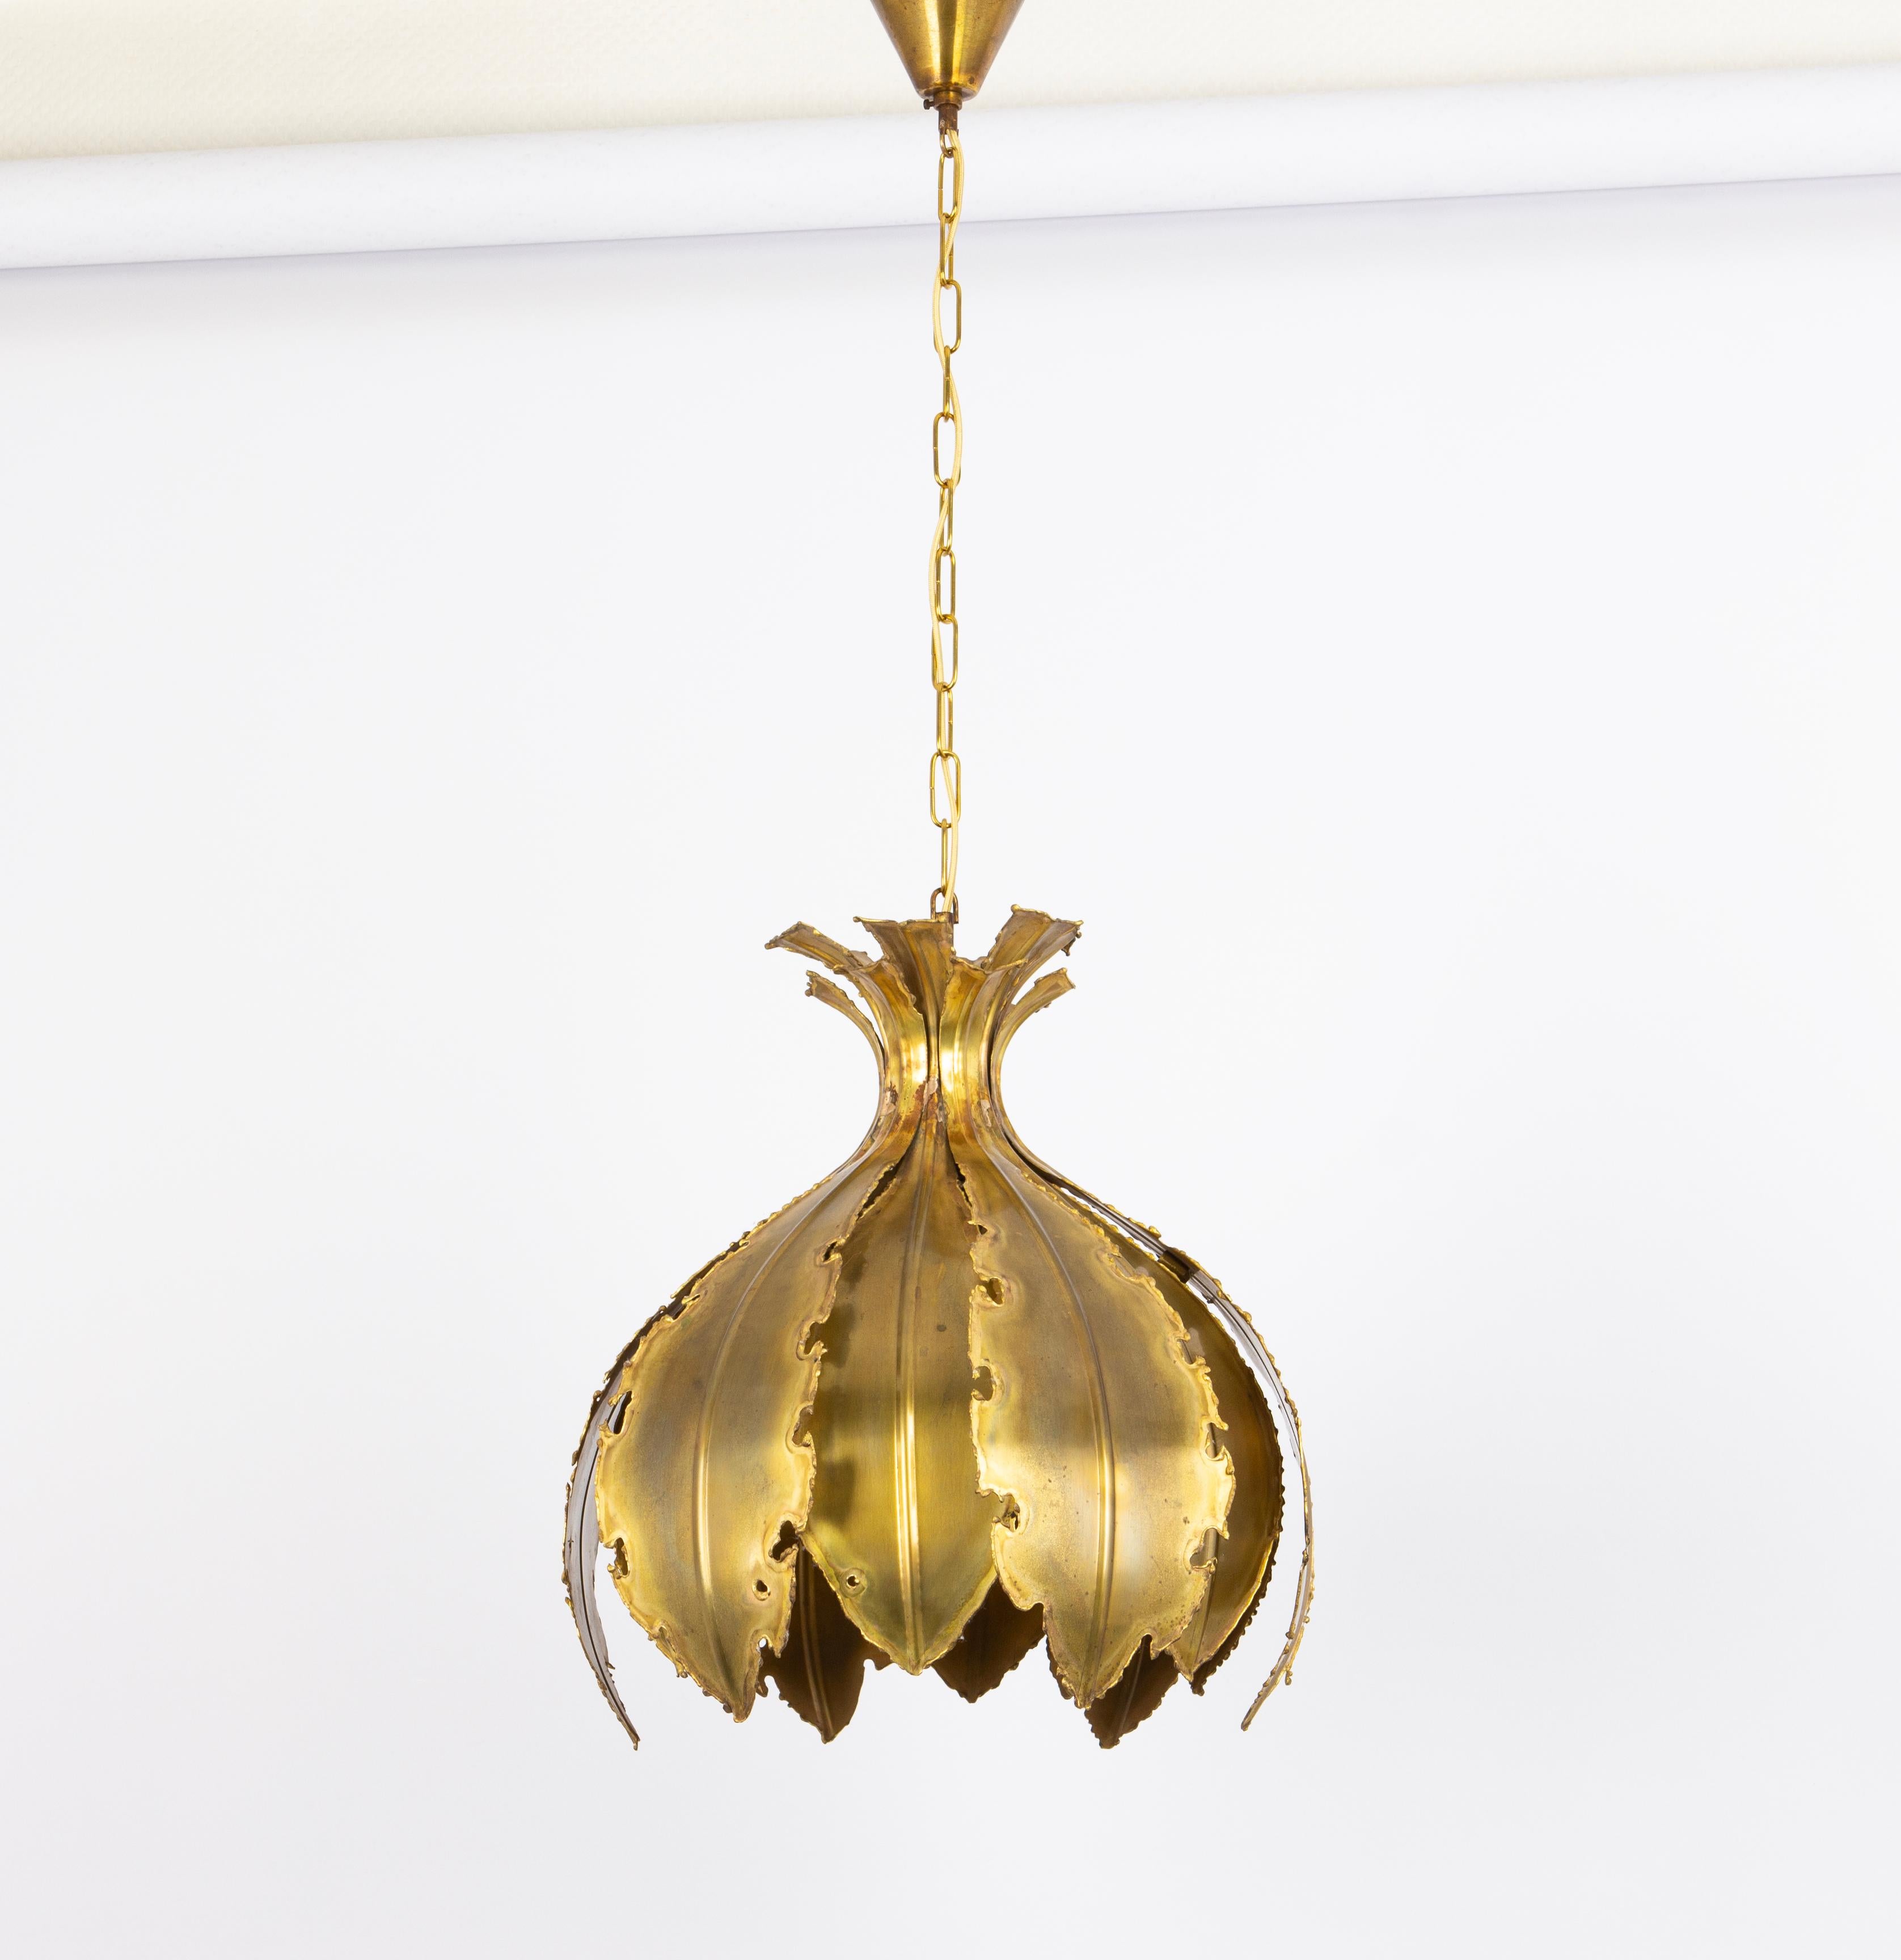 1 of 5 Stunning Brass Pendants designed svend Aage Holm Sørensen, Denmark, 1960s (pendentifs en laiton) Bon état - En vente à Aachen, NRW